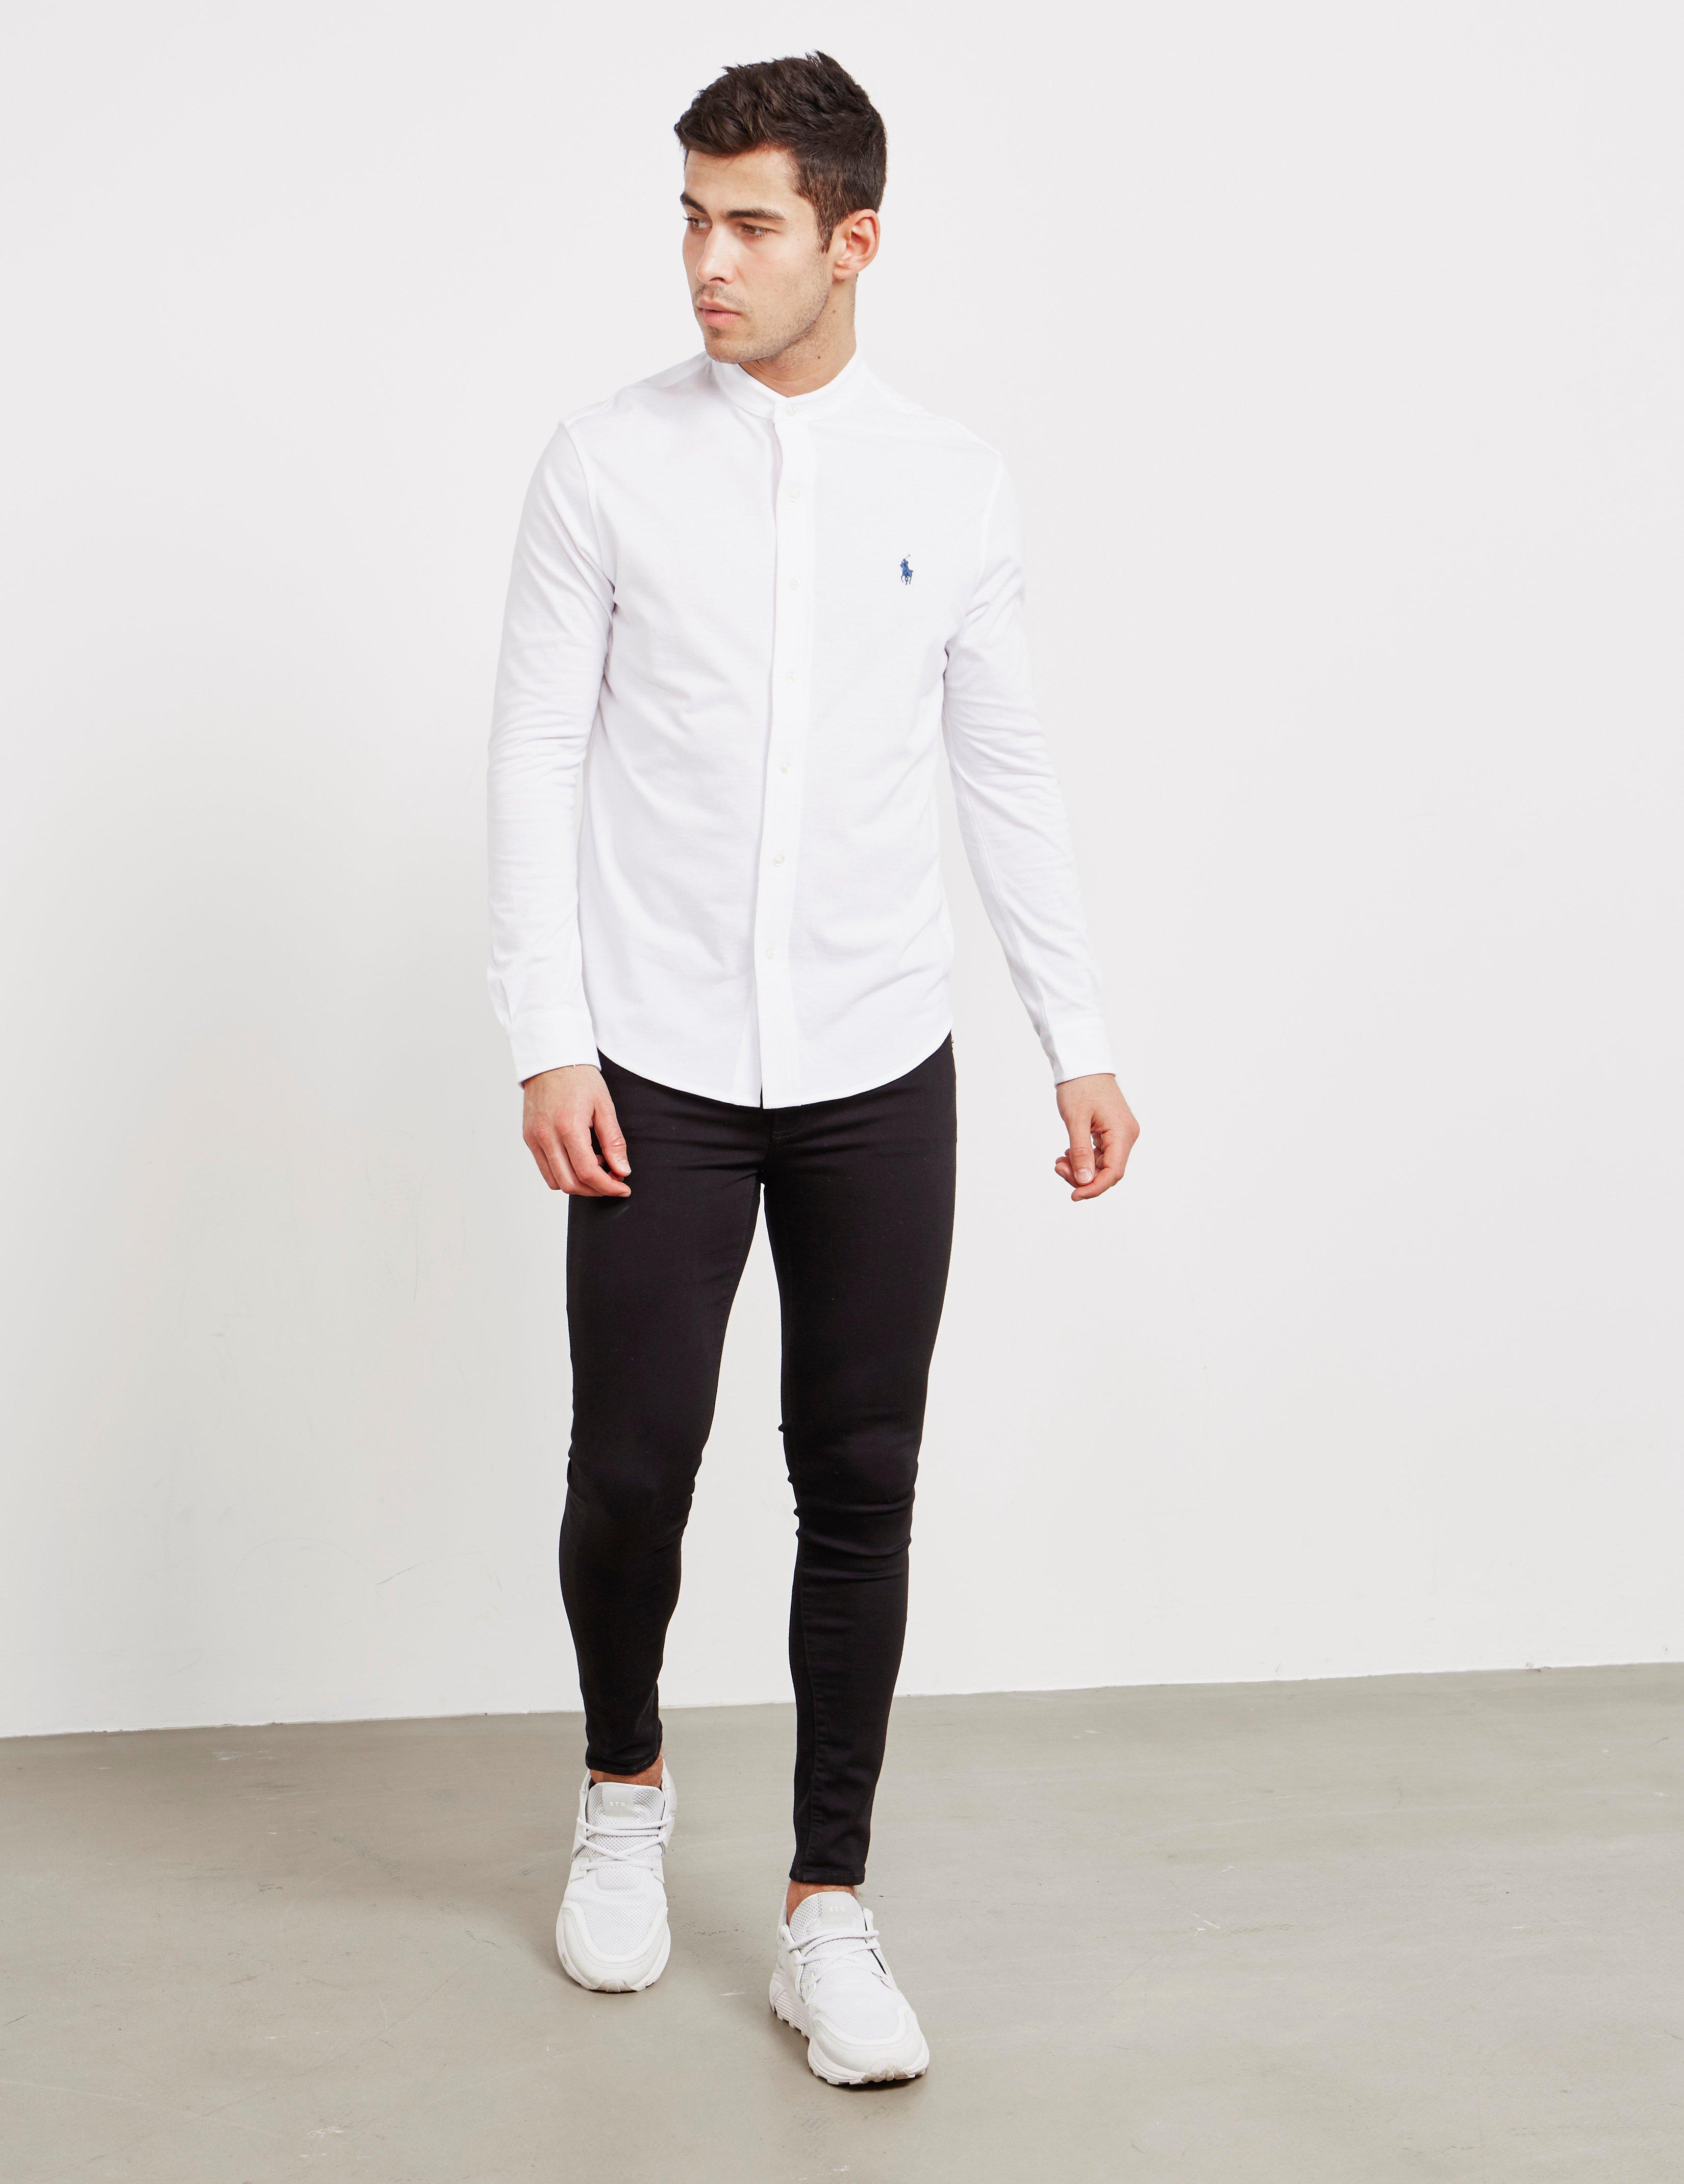 Shirt Grandad collar white with pocket Long Sleeve R504 